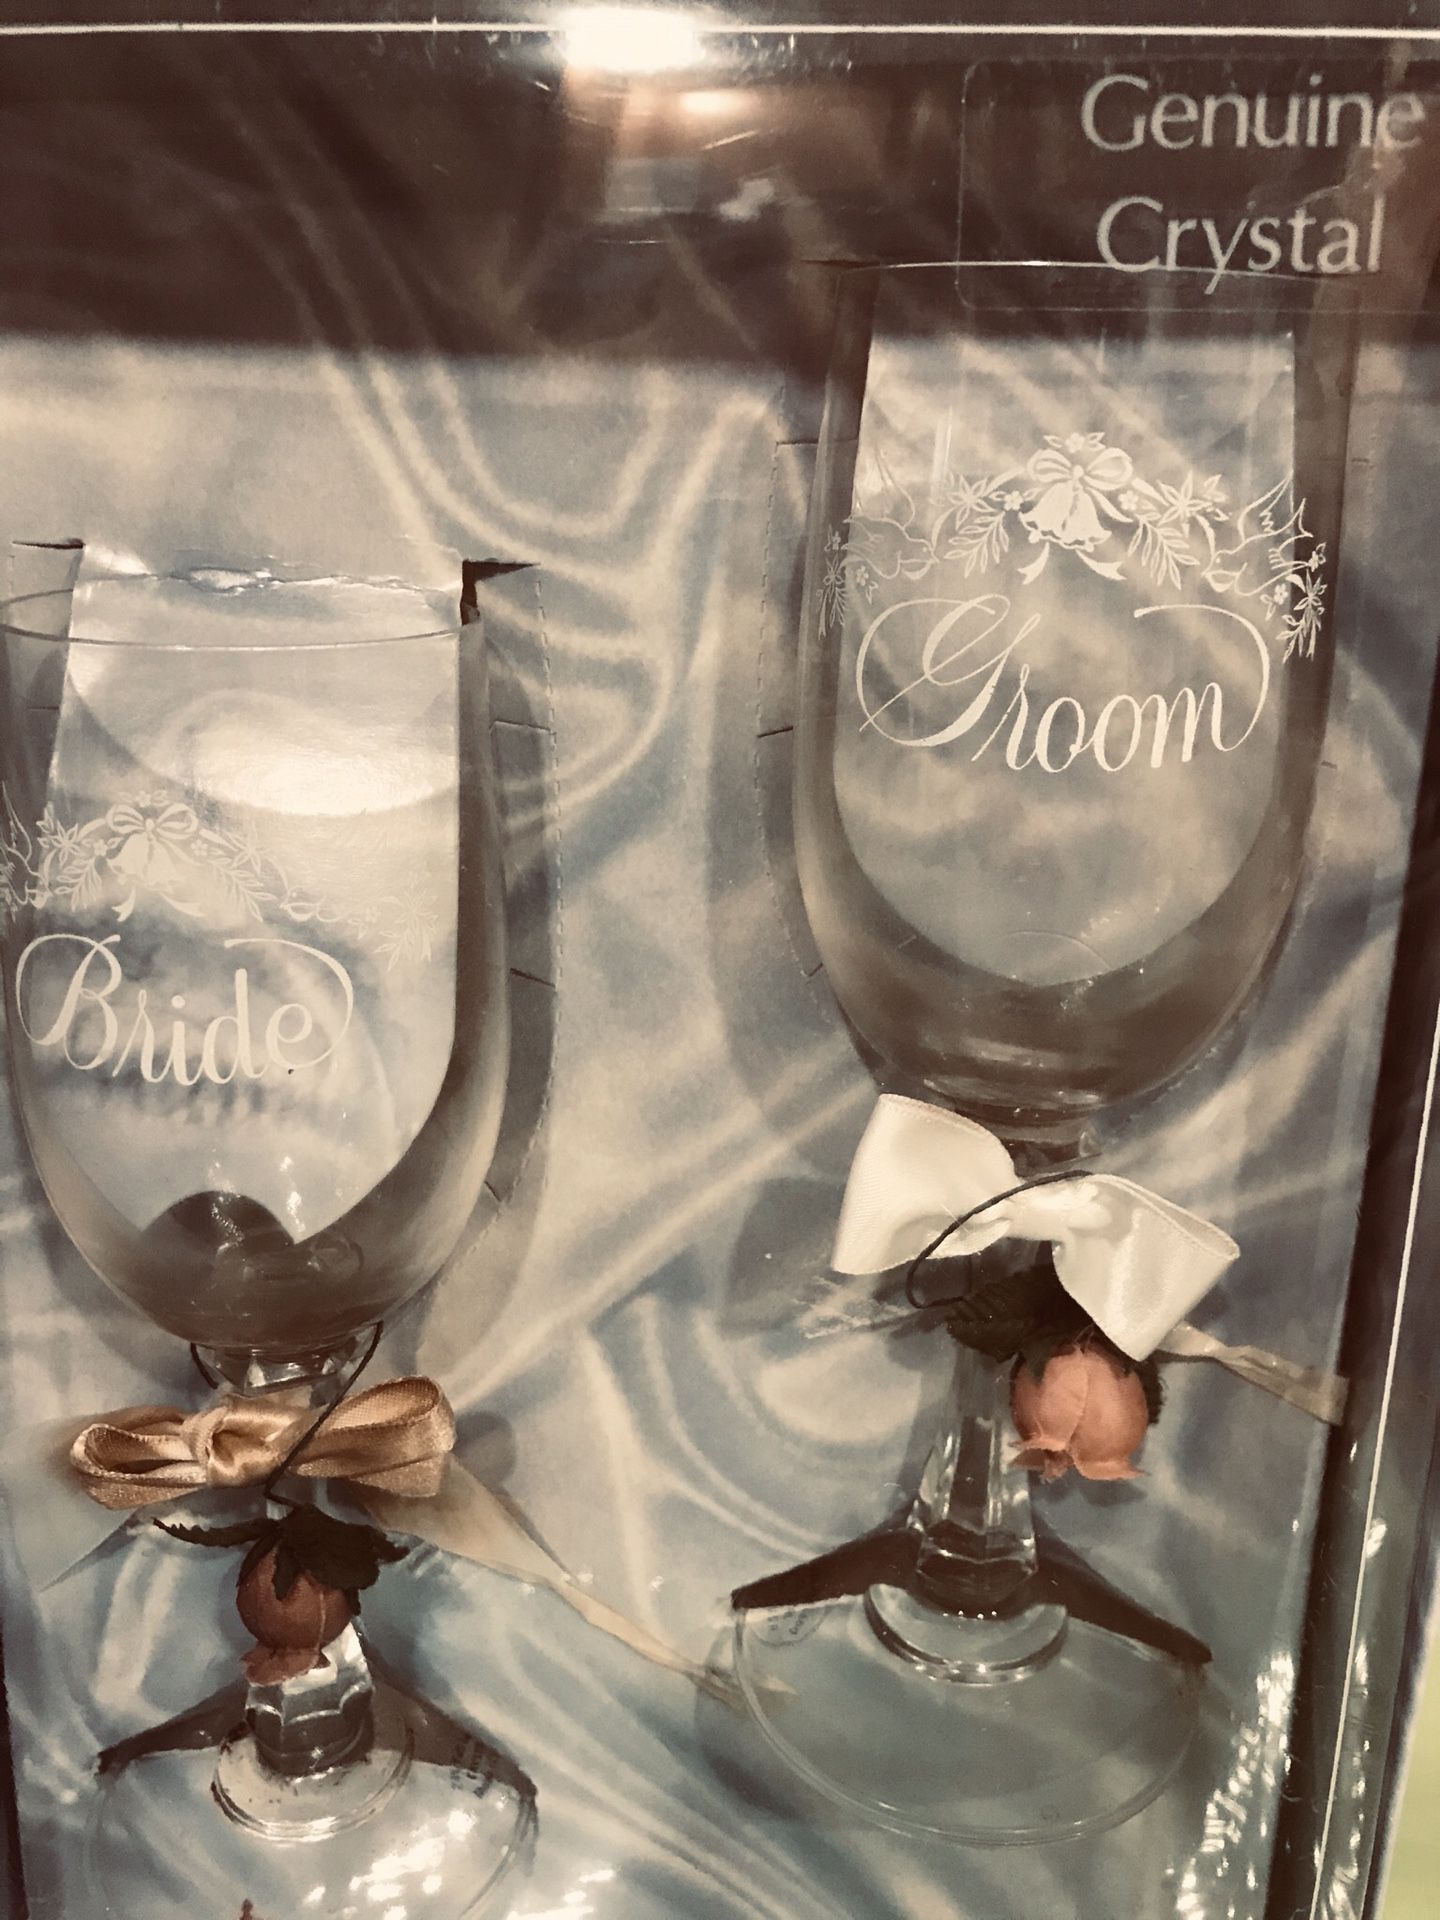 Genuine Crystal Bride and Groom Champagne Glasses